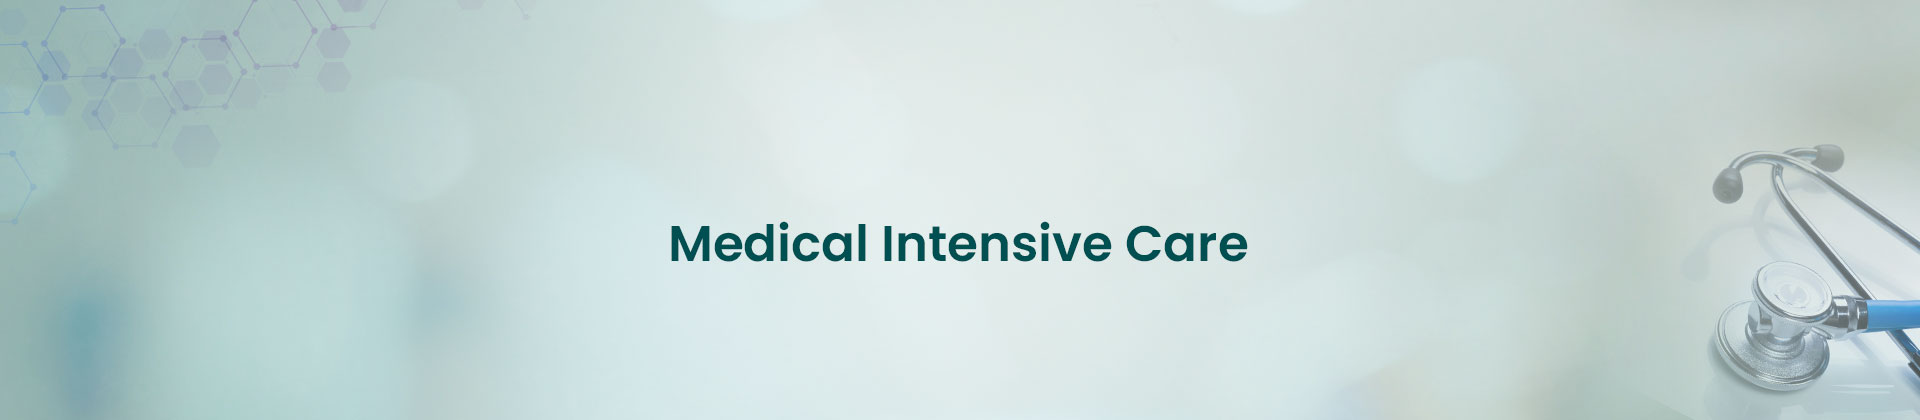 Medical Intensive Care